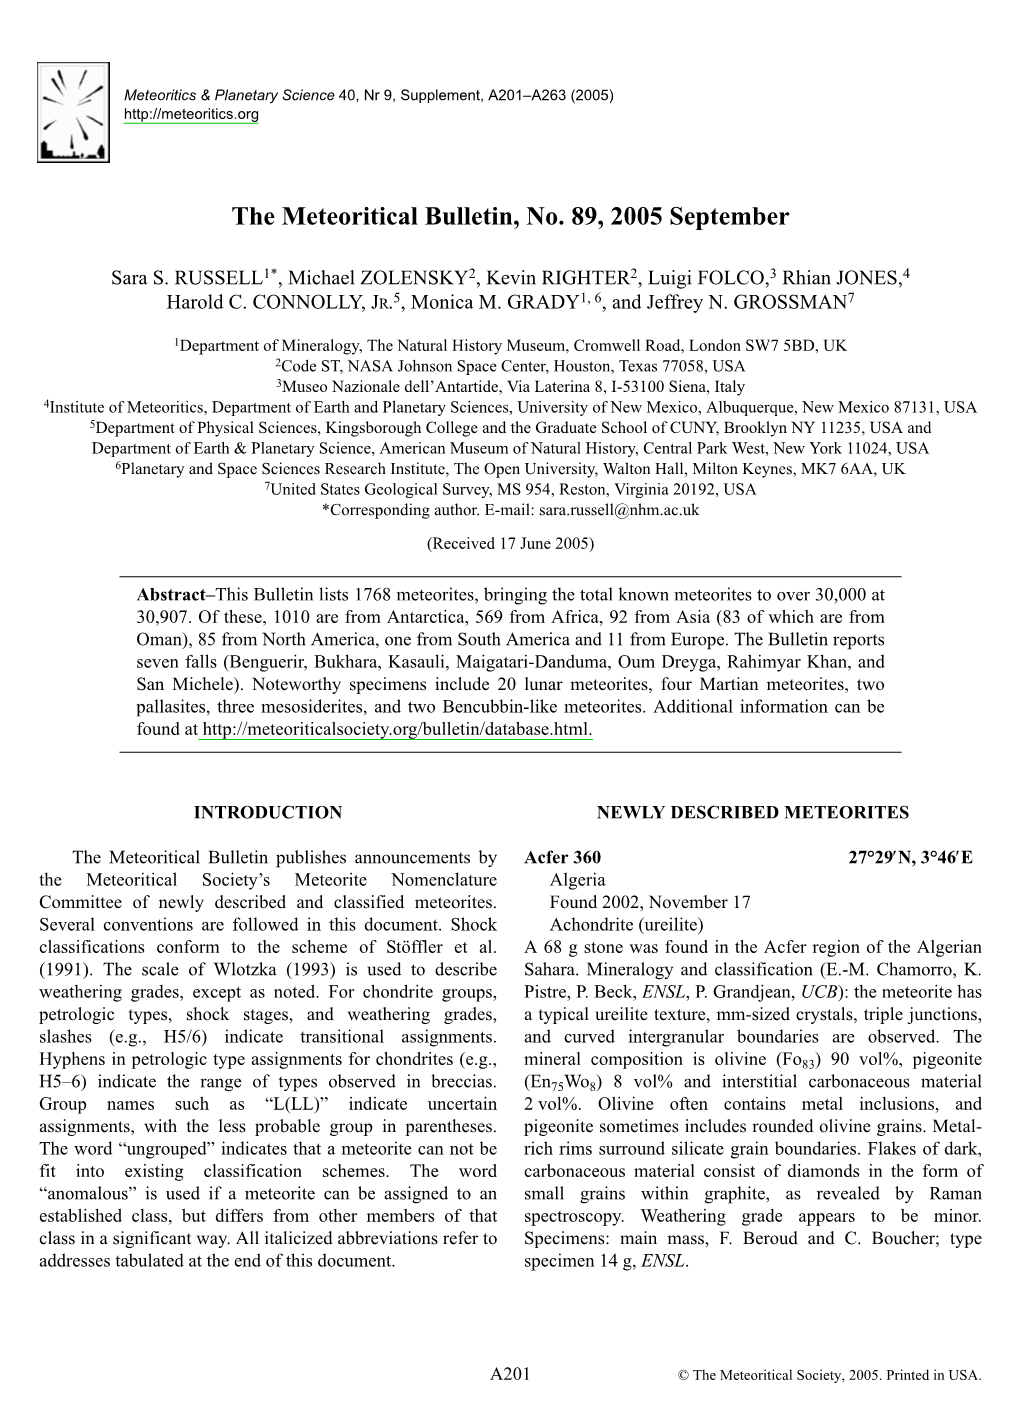 The Meteoritical Bulletin, No. 89, 2005 September